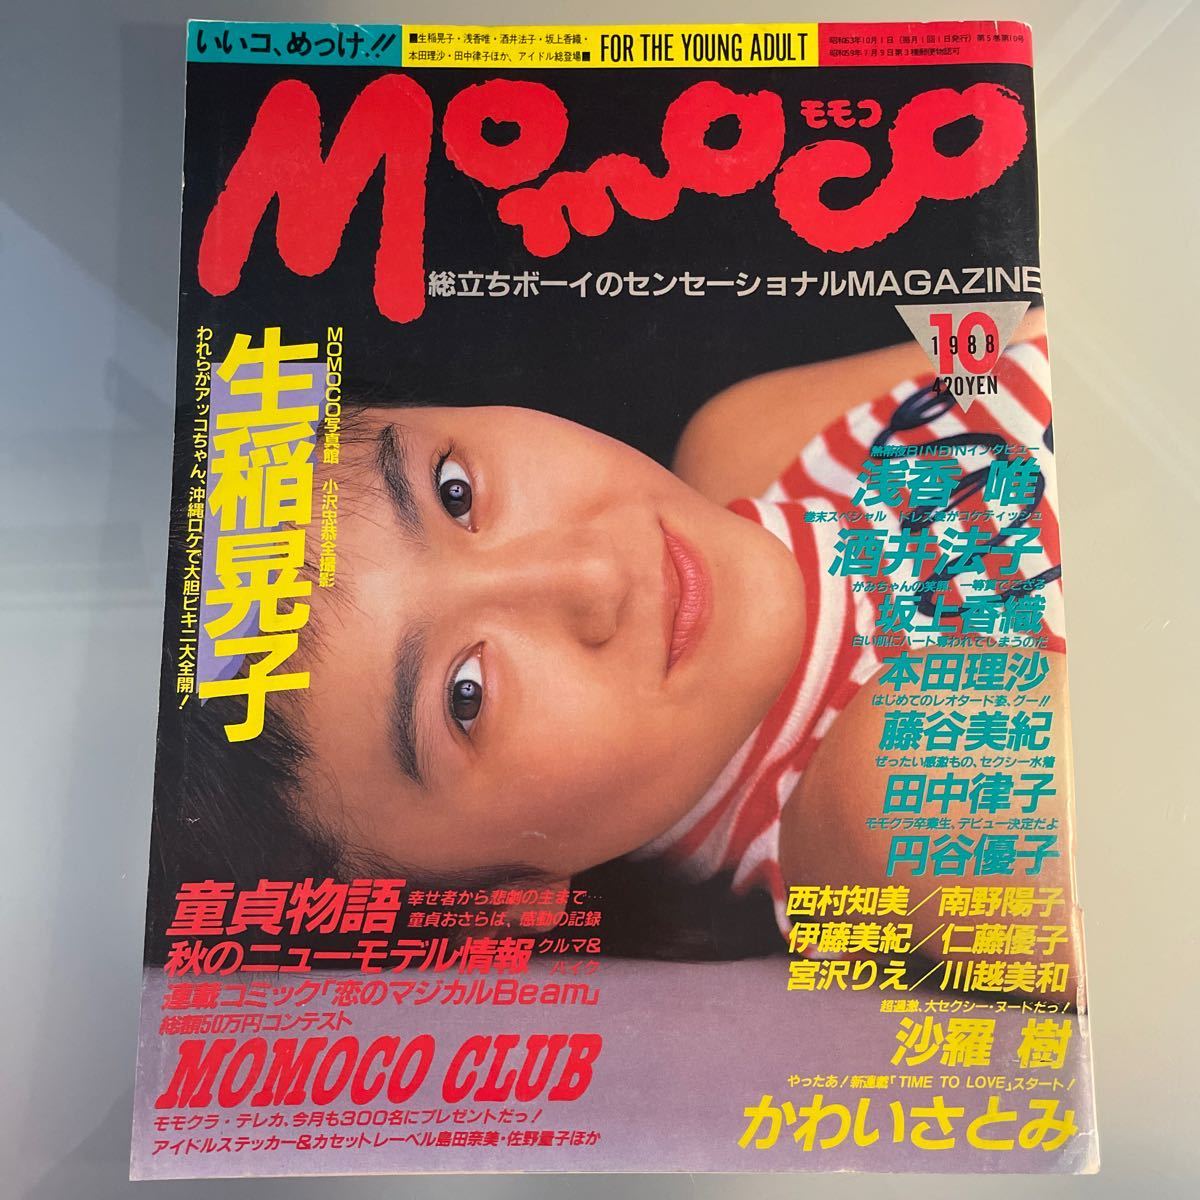  Momoko MOMOCO 1988.10 Sakagami Kaori /... licca / Ikuina Akiko /.../. река ..1c1p/ глициния . прекрасный ./ иен . super ./ Kawagoe Miwa /. глициния super ./ средний река . прекрасный ./ лен сырой ..